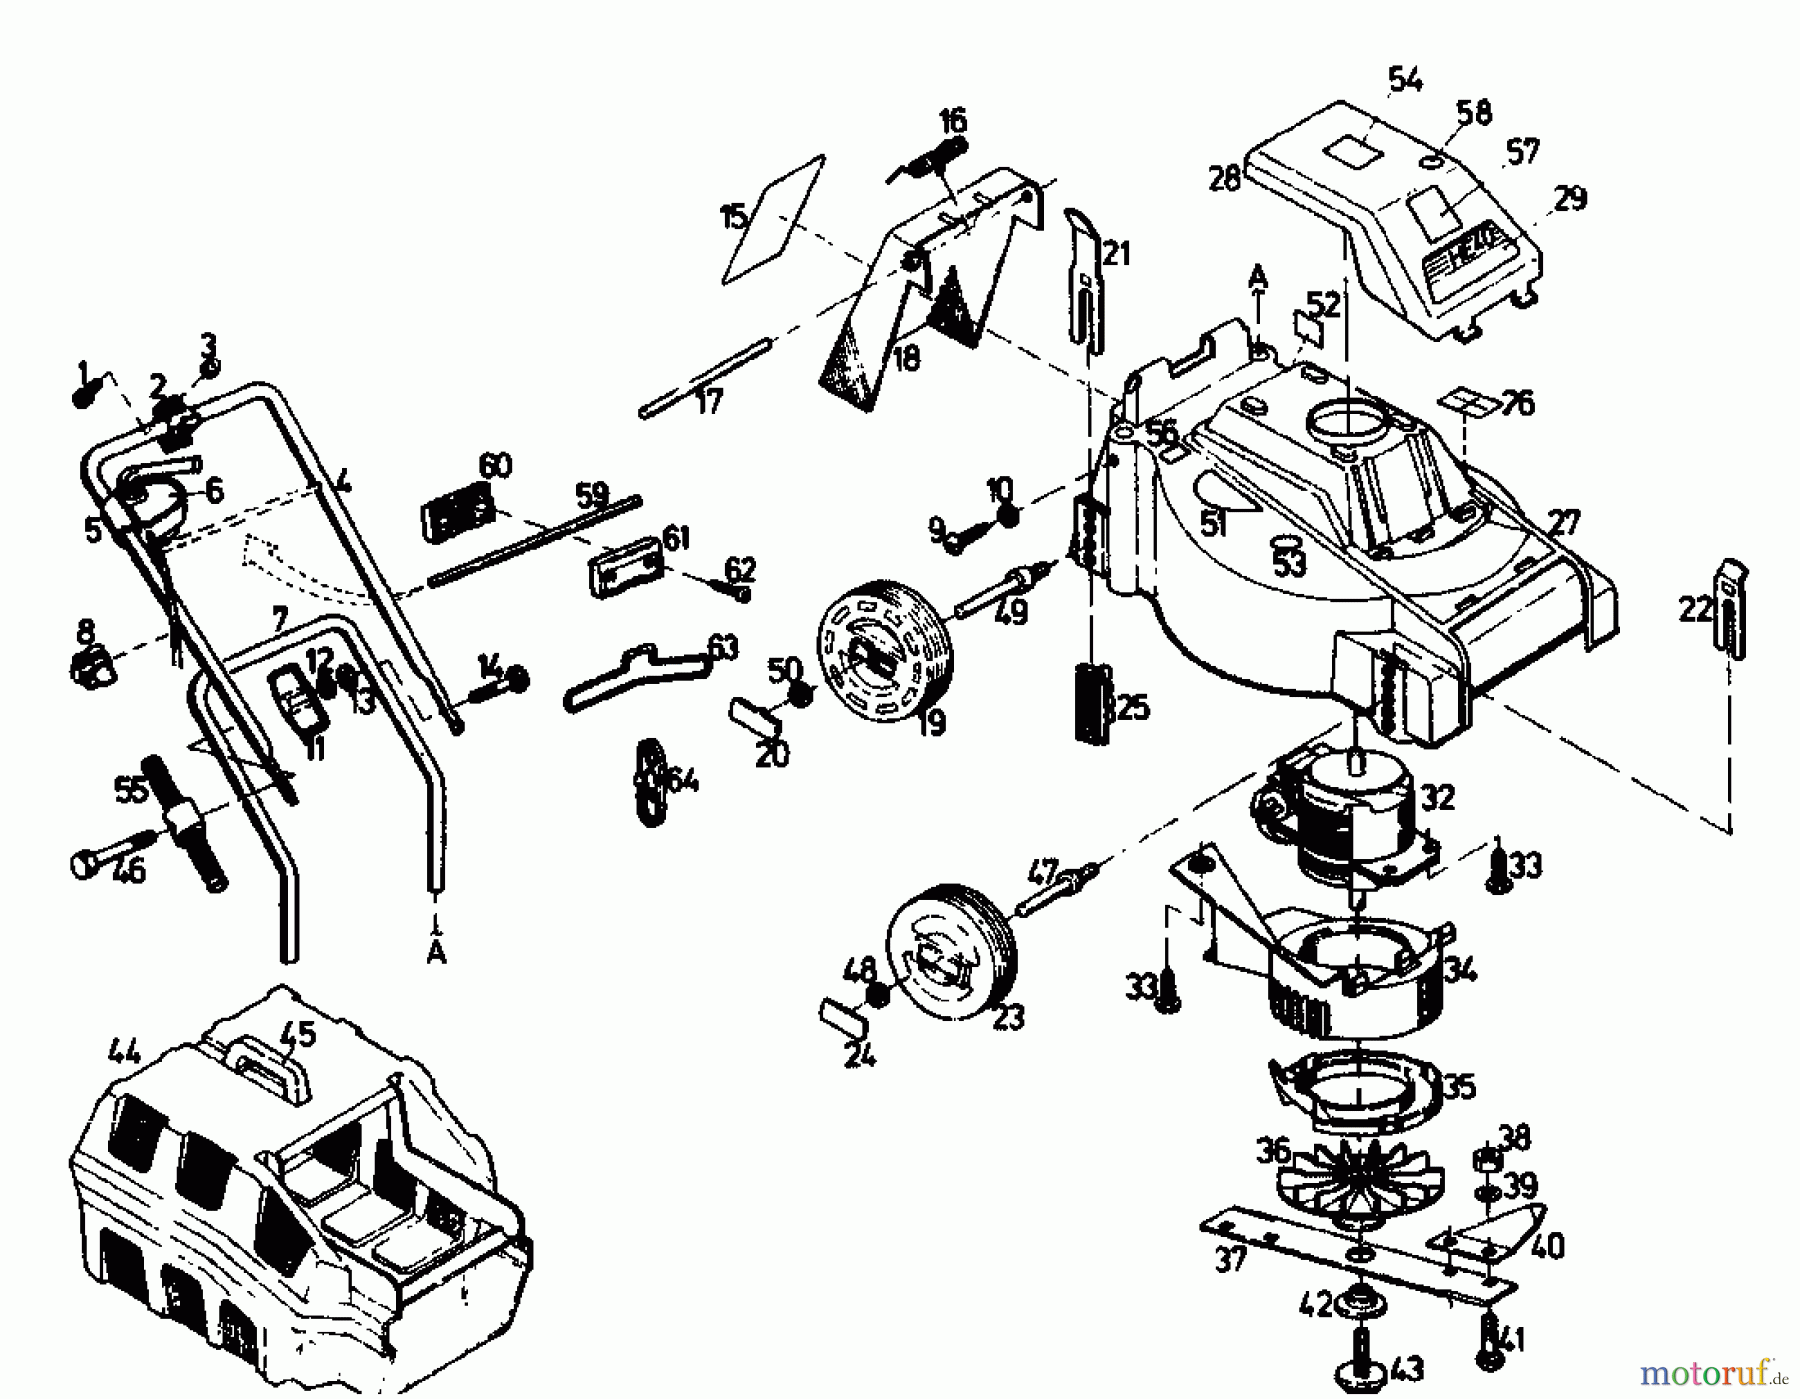  Gutbrod Electric mower HE 40 02889.04  (1989) Basic machine